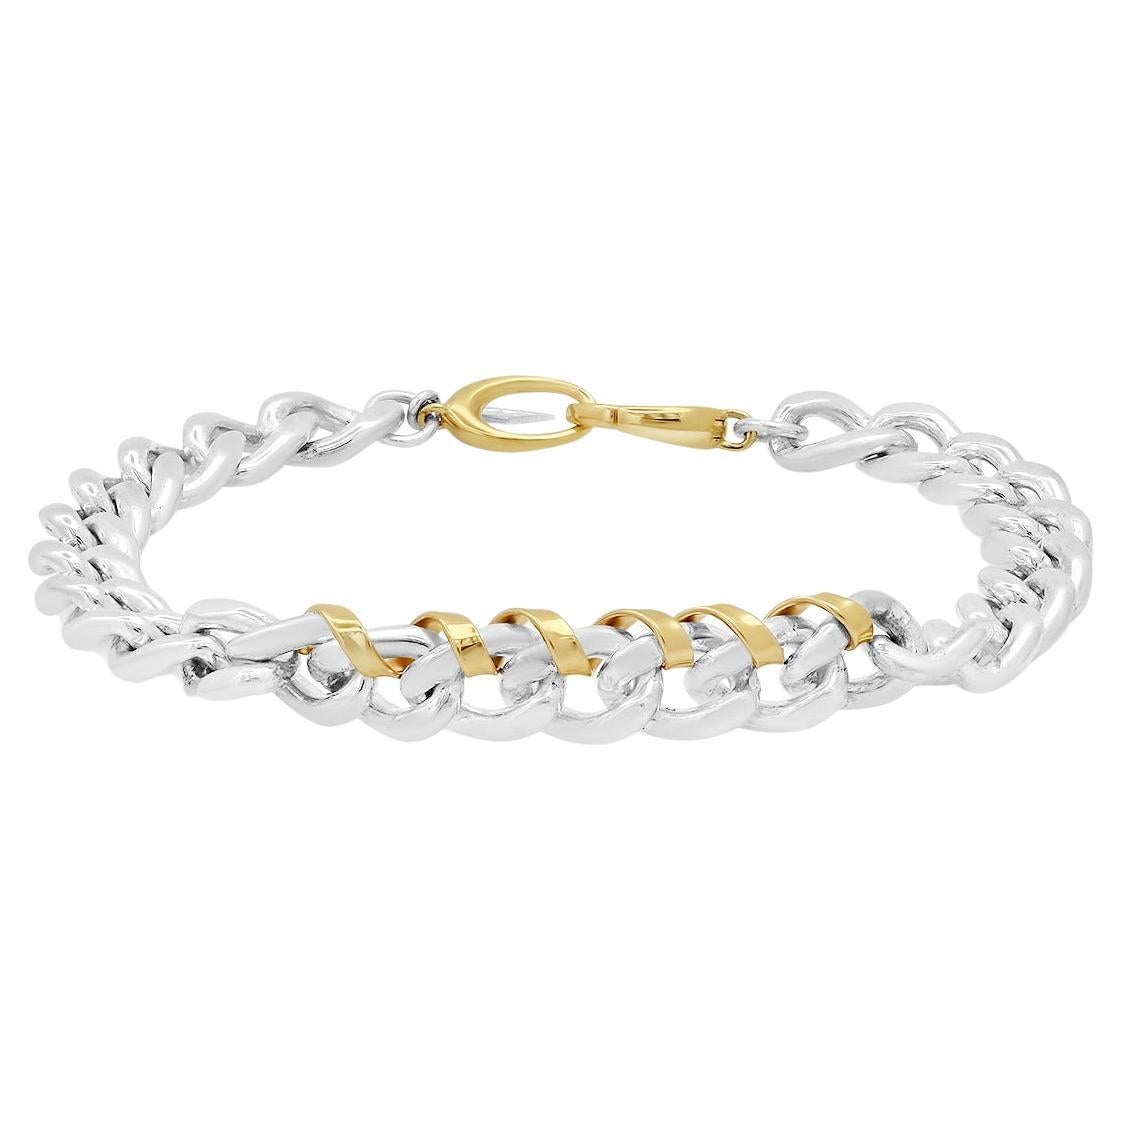 Sterling Silver "Heavy Metal" Wrap-Me-Up Chain Bracelet w/ 14K Gold: Size M/L